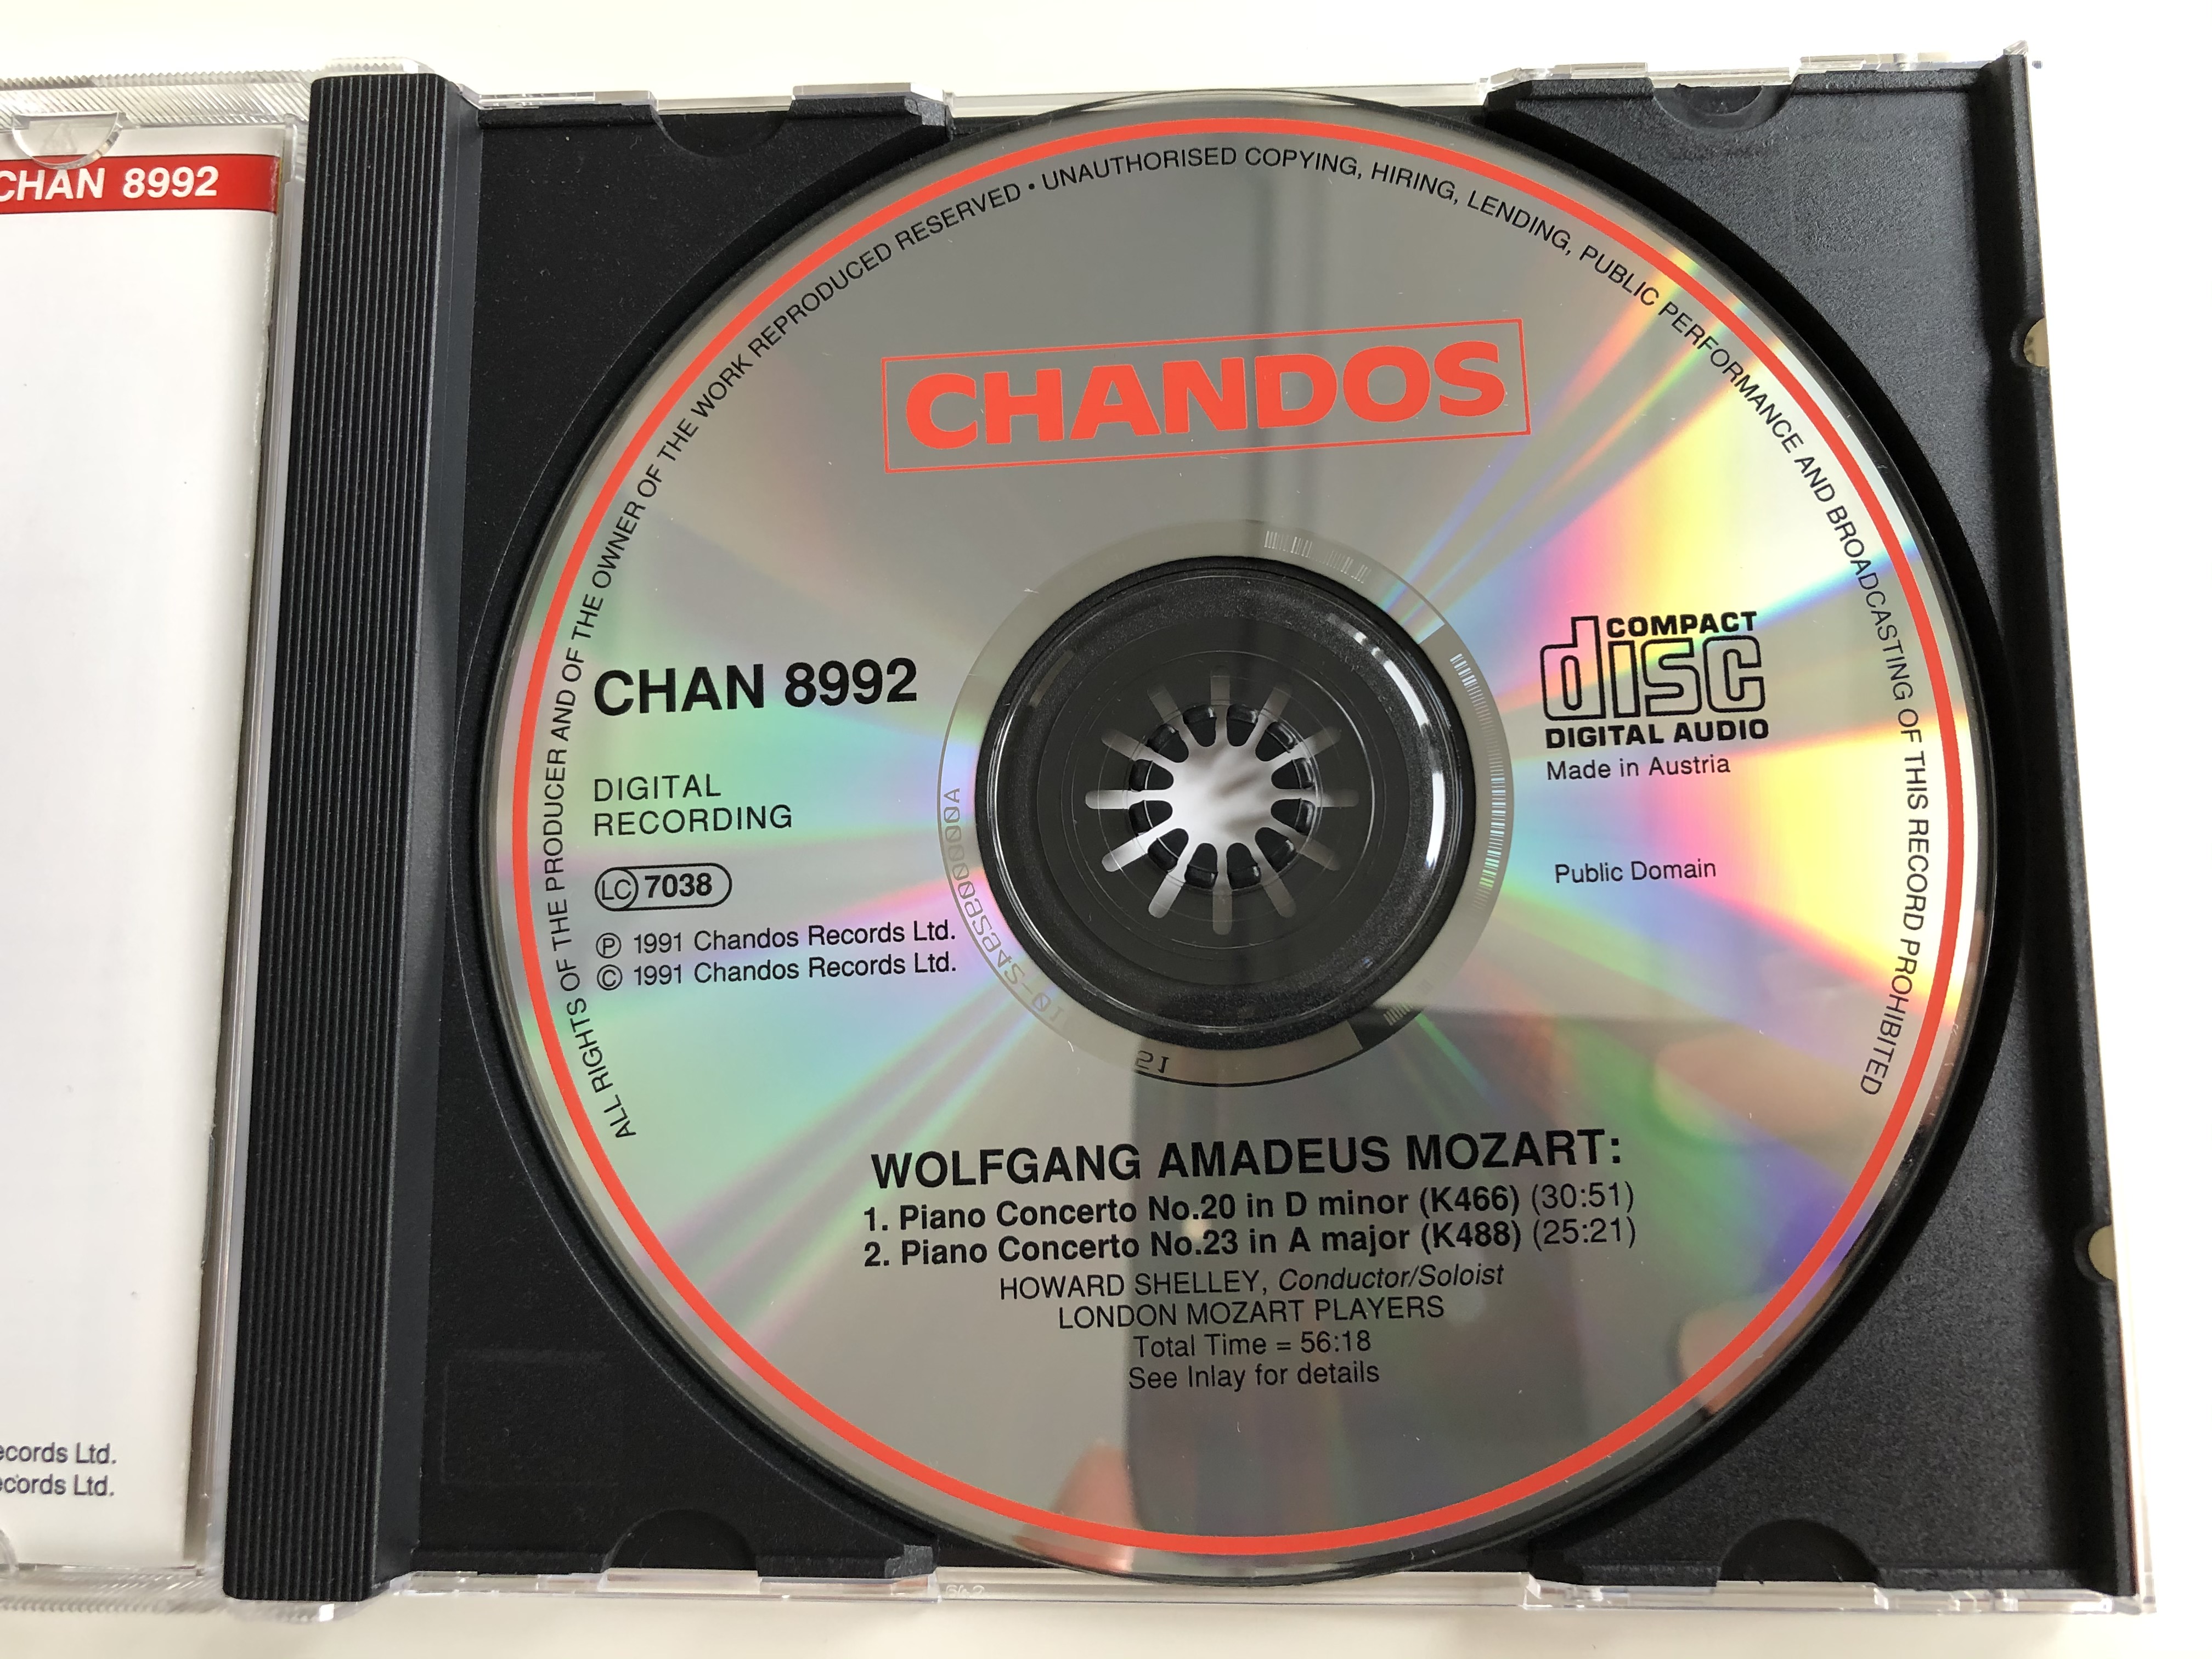 mozart-piano-concertos-no.-20-k466-no.-23-k488-howard-shelley-london-mozart-players-vol.-1-chandos-records-audio-cd-1991-chan-8992-8-.jpg